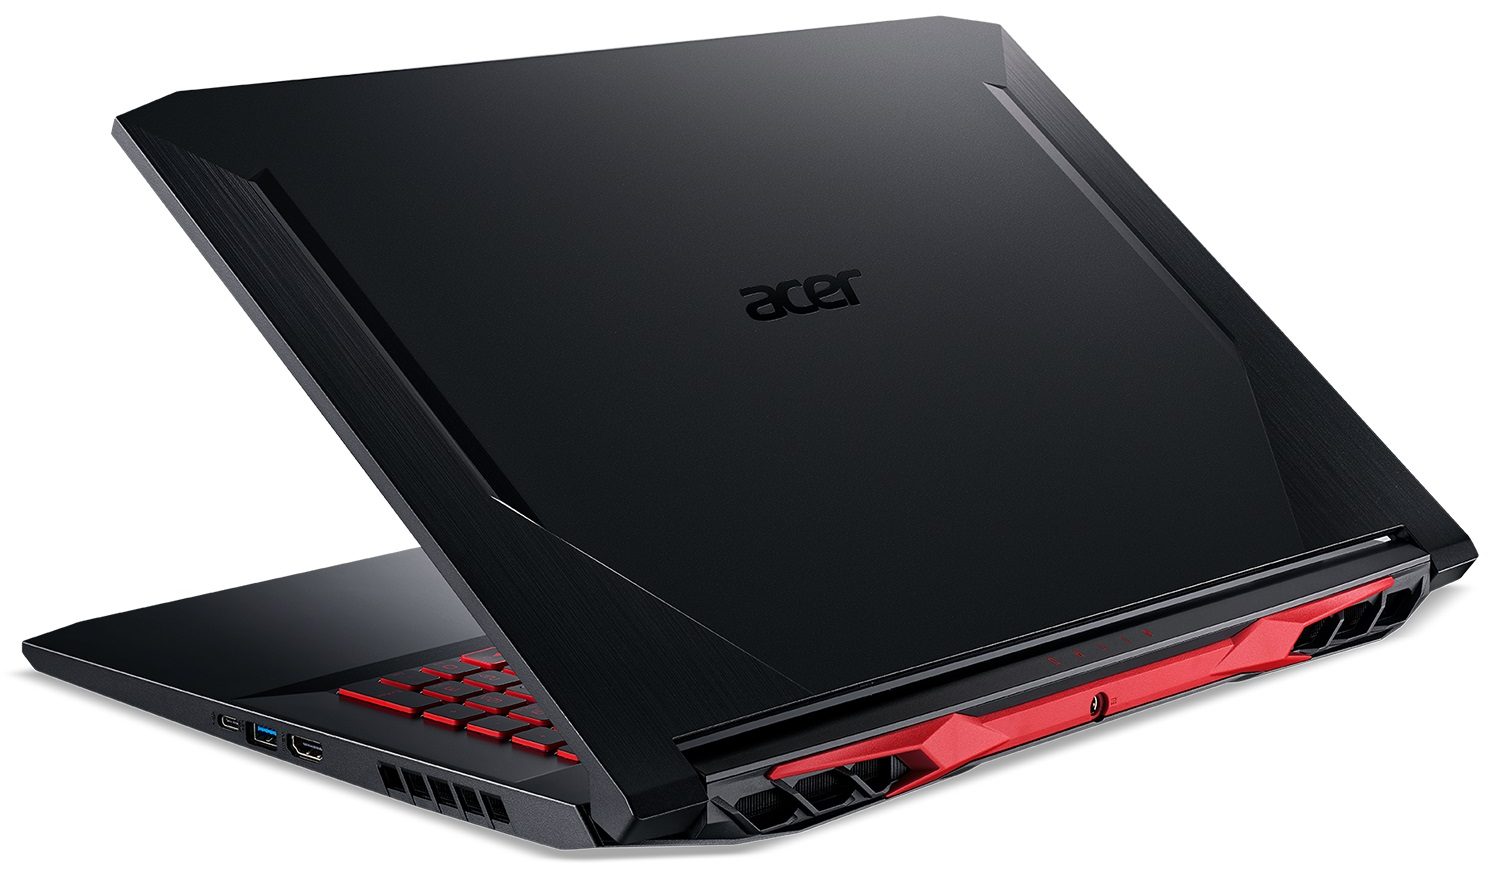 Acer Nitro 5 - i7-10750H · 1660 Ti · 17.3”, HD (1920 x 1080), 120 Hz, IPS · 512GB SSD · 8GB DDR4 · Windows 10 Home | LaptopMedia.com